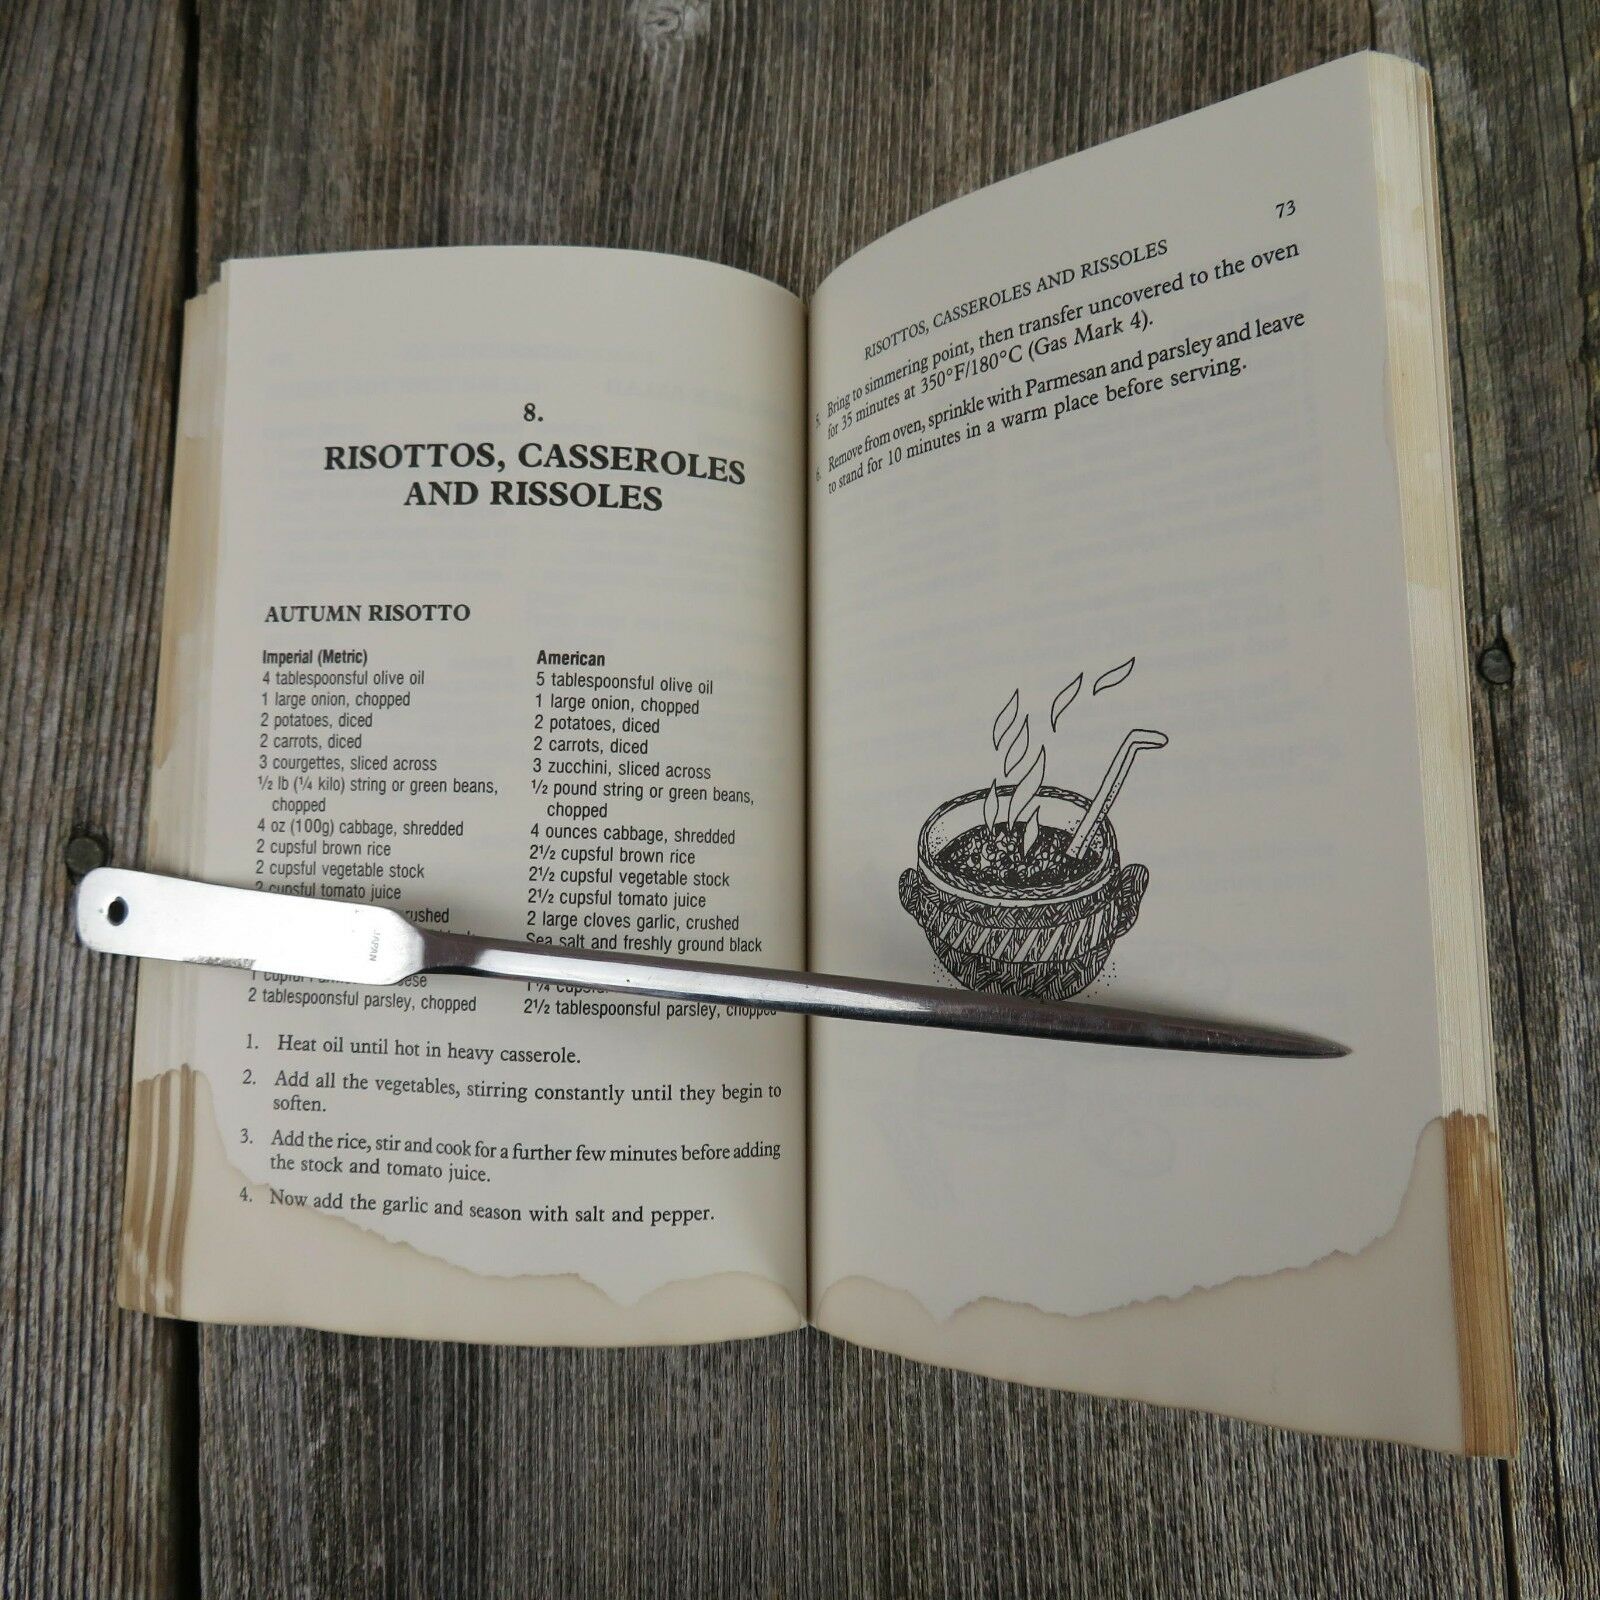 Vintage Vegetarian Cook Book The Brown Rice Cookbook Craig Ann Sams 1988 - At Grandma's Table